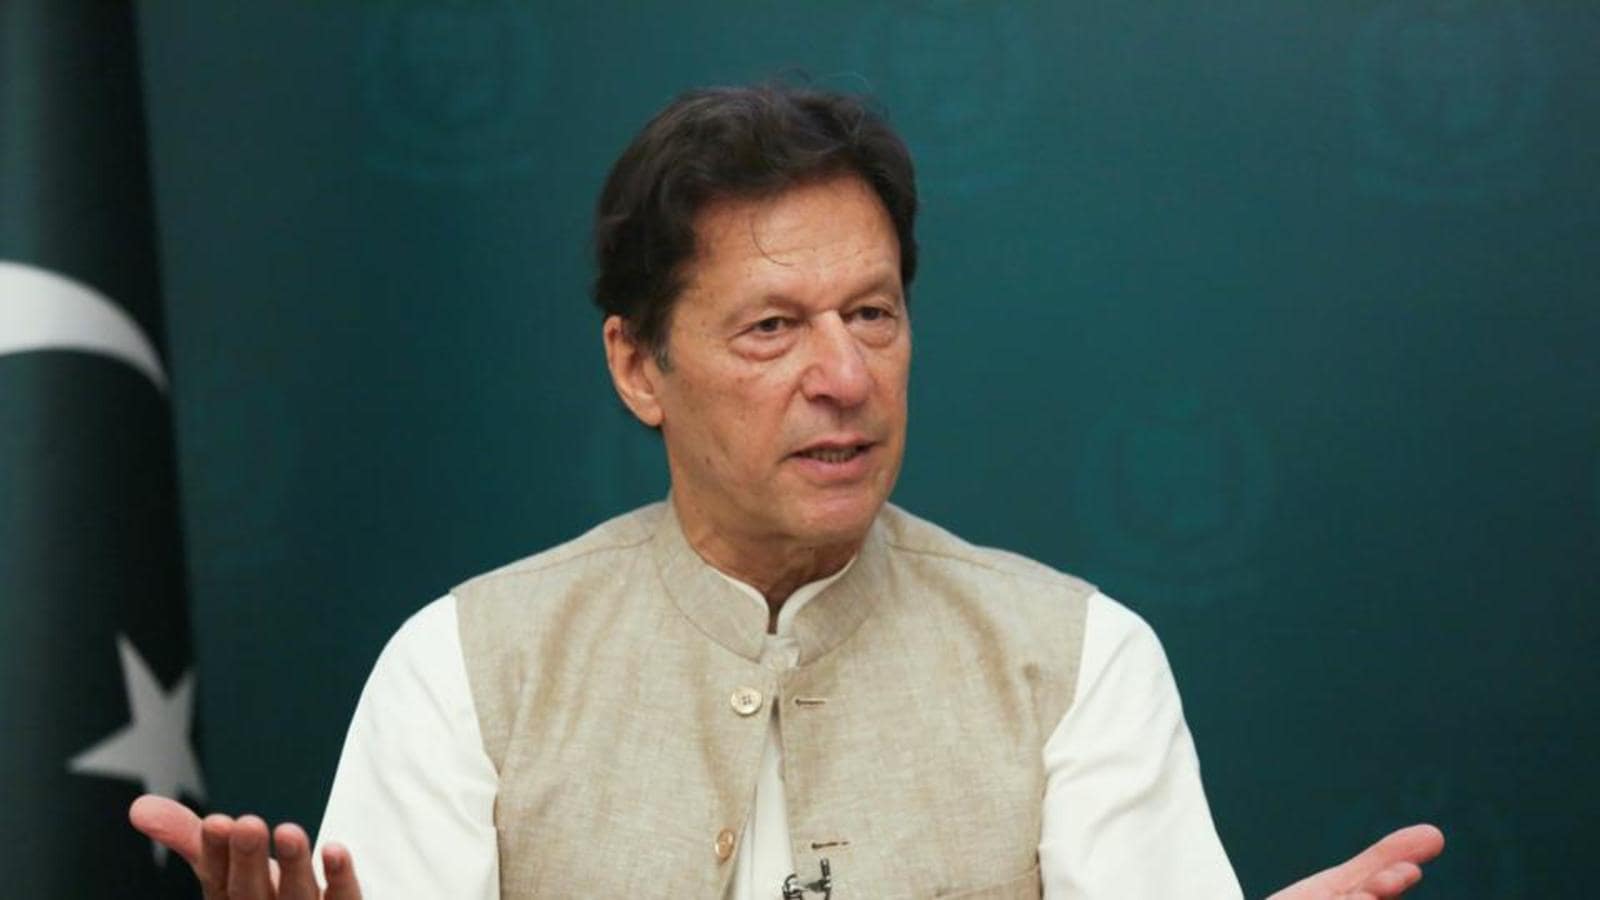 Pegasus list: Pakistan seeks UN probe into reports of PM Imran Khan’s name | Latest News India